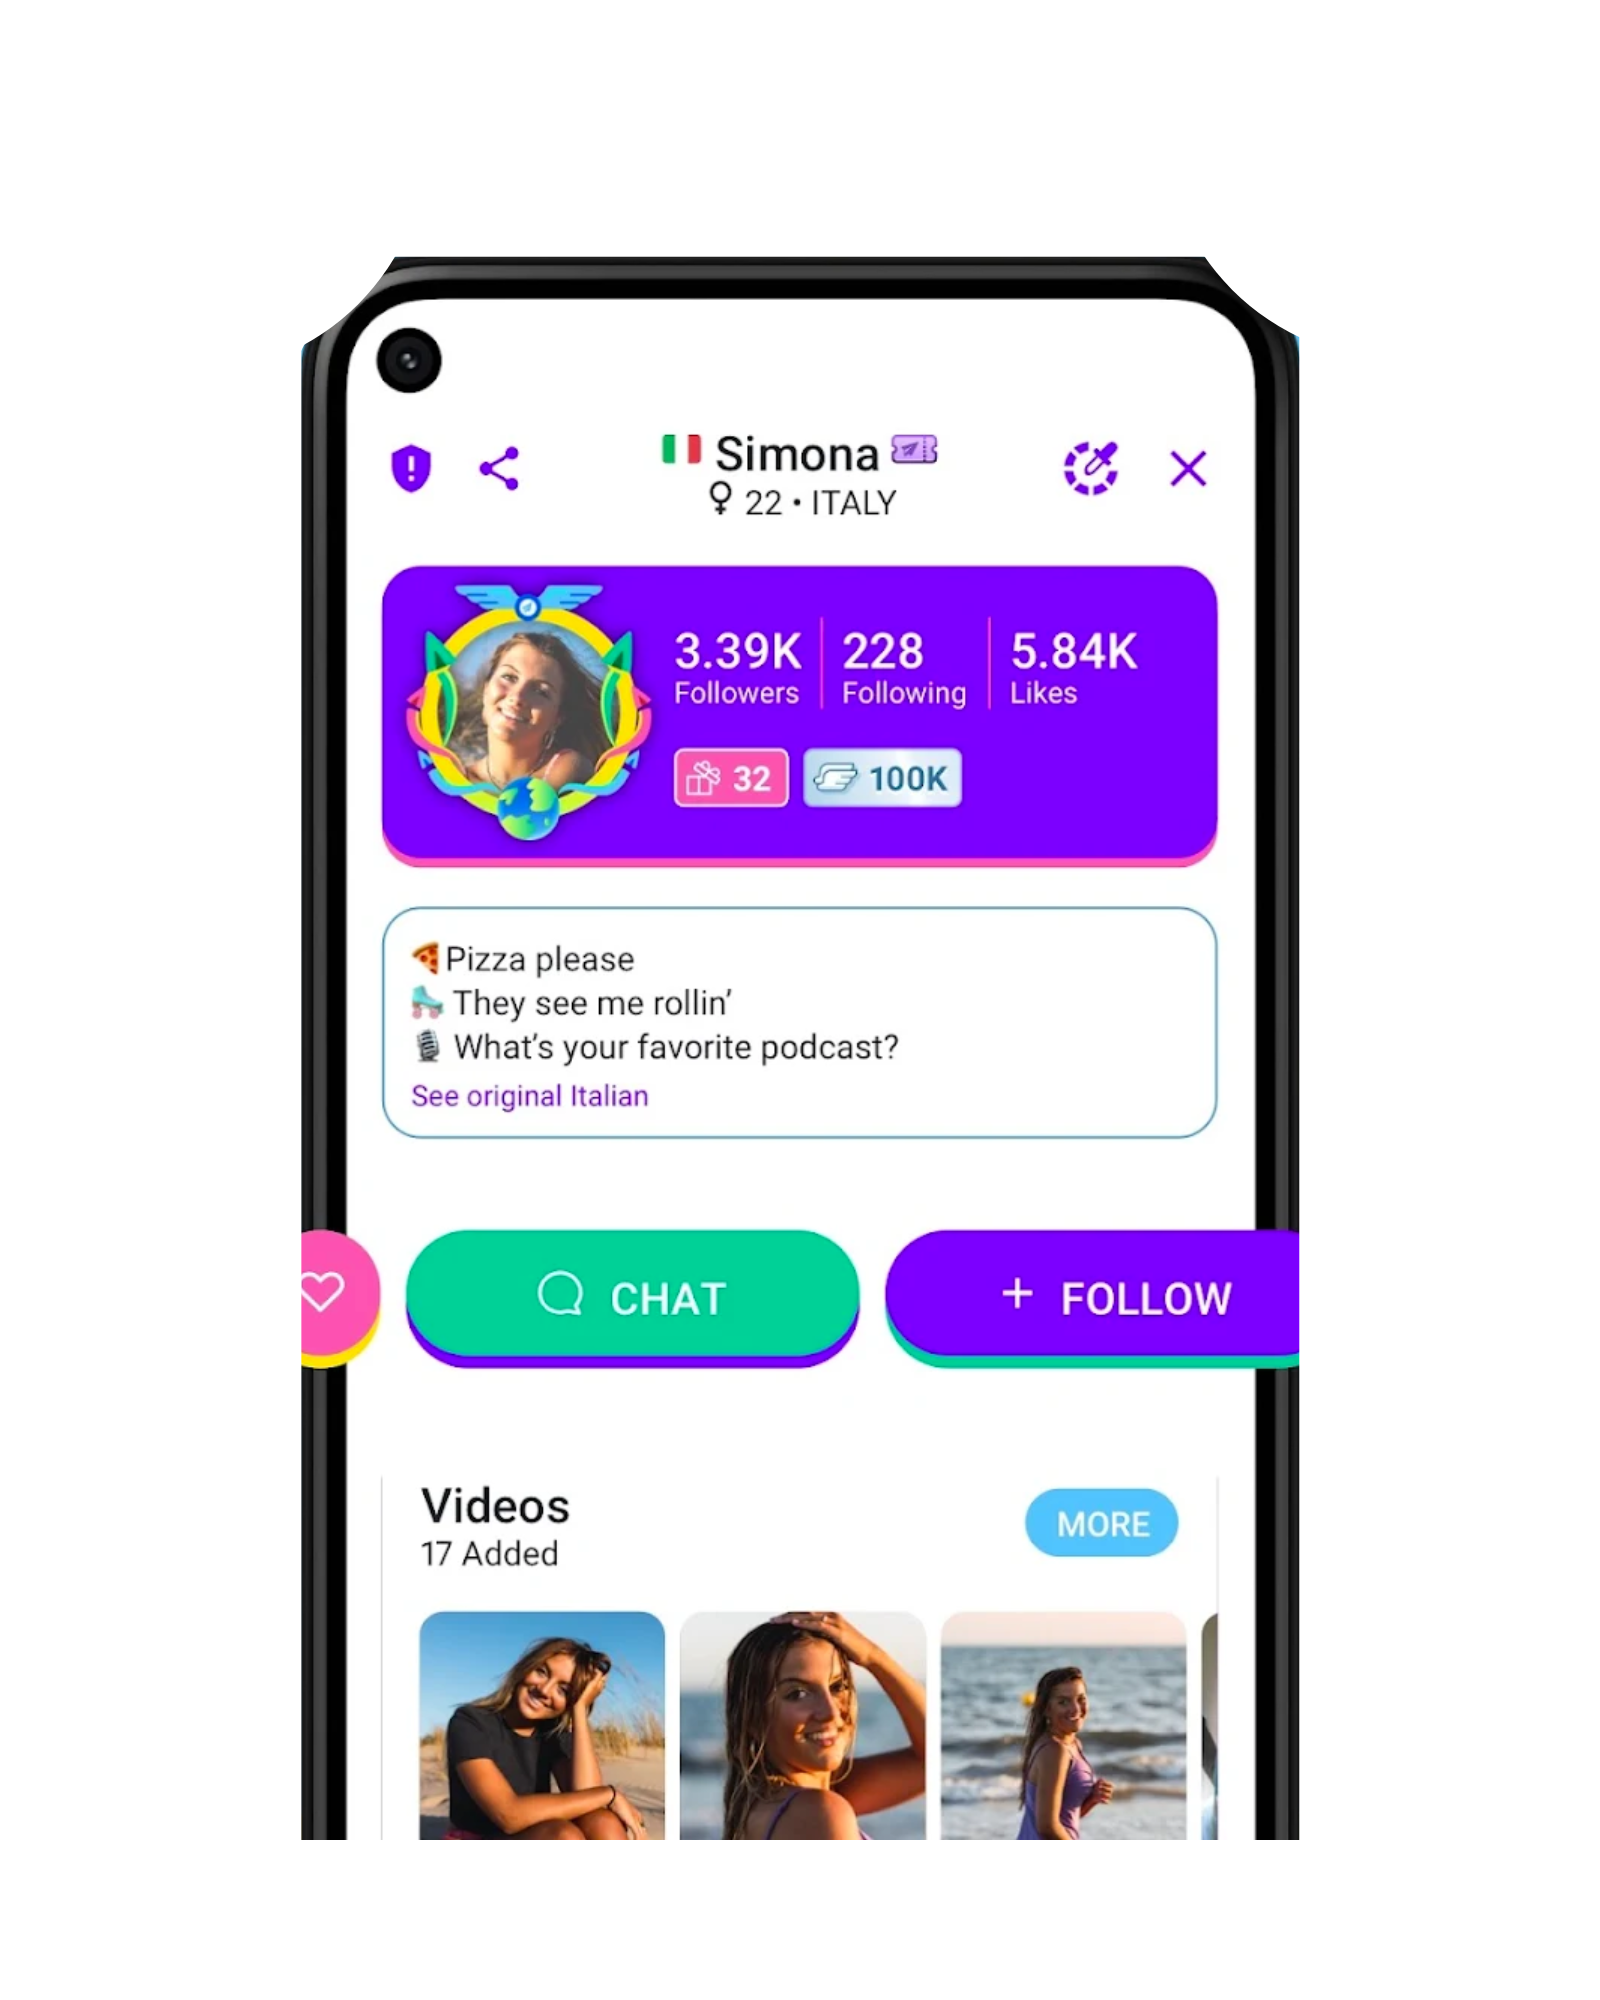 ZINGR – the safest app to meet friends online in your area 